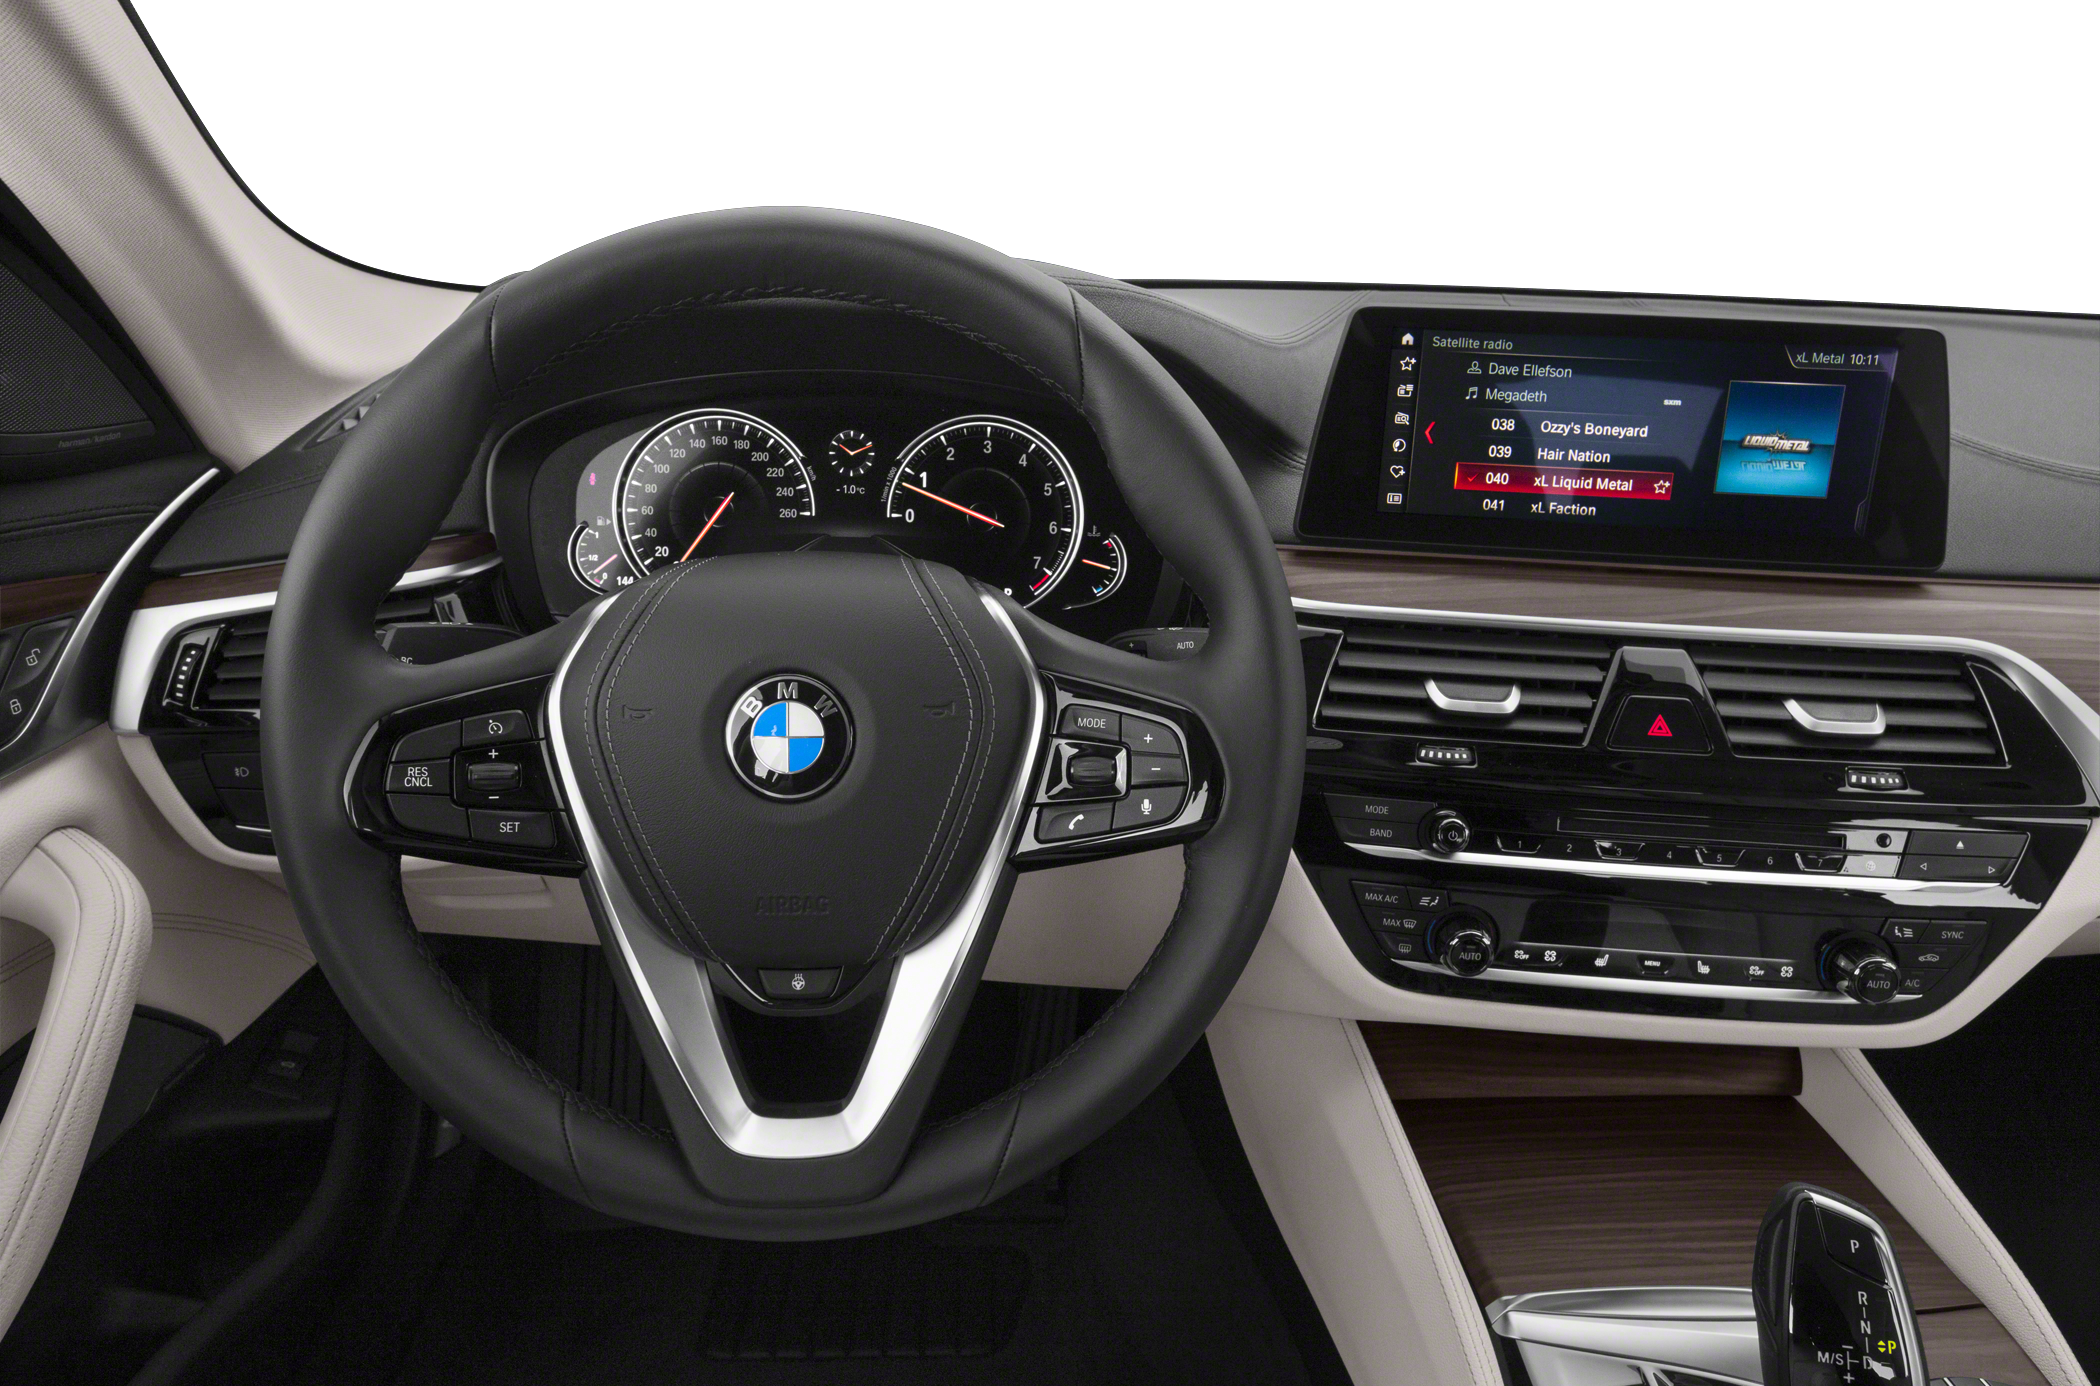 2020 BMW 530